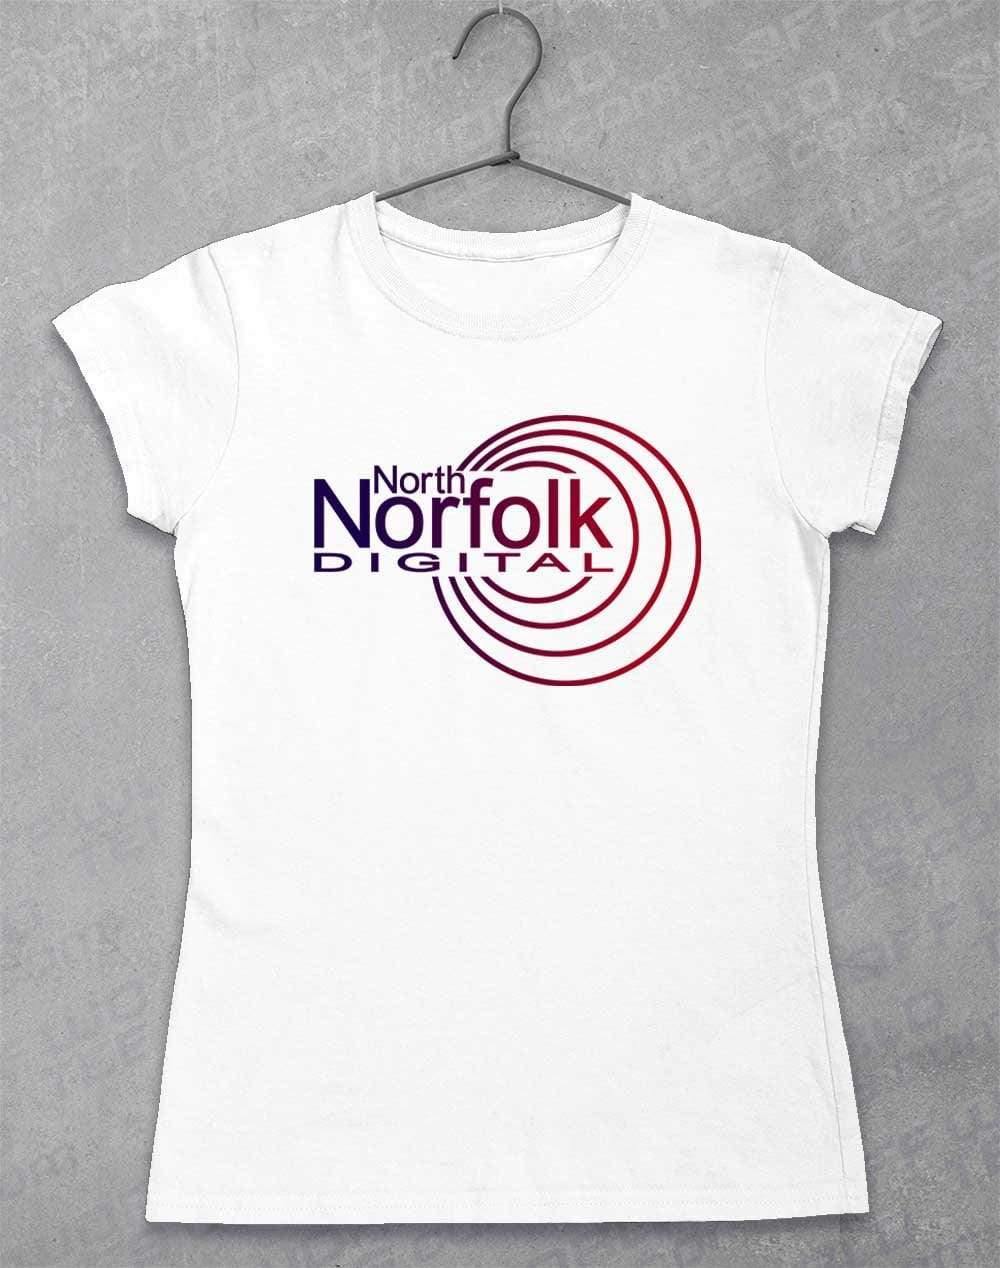 North Norfolk Digital Womens T-Shirt 8-10 / White  - Off World Tees